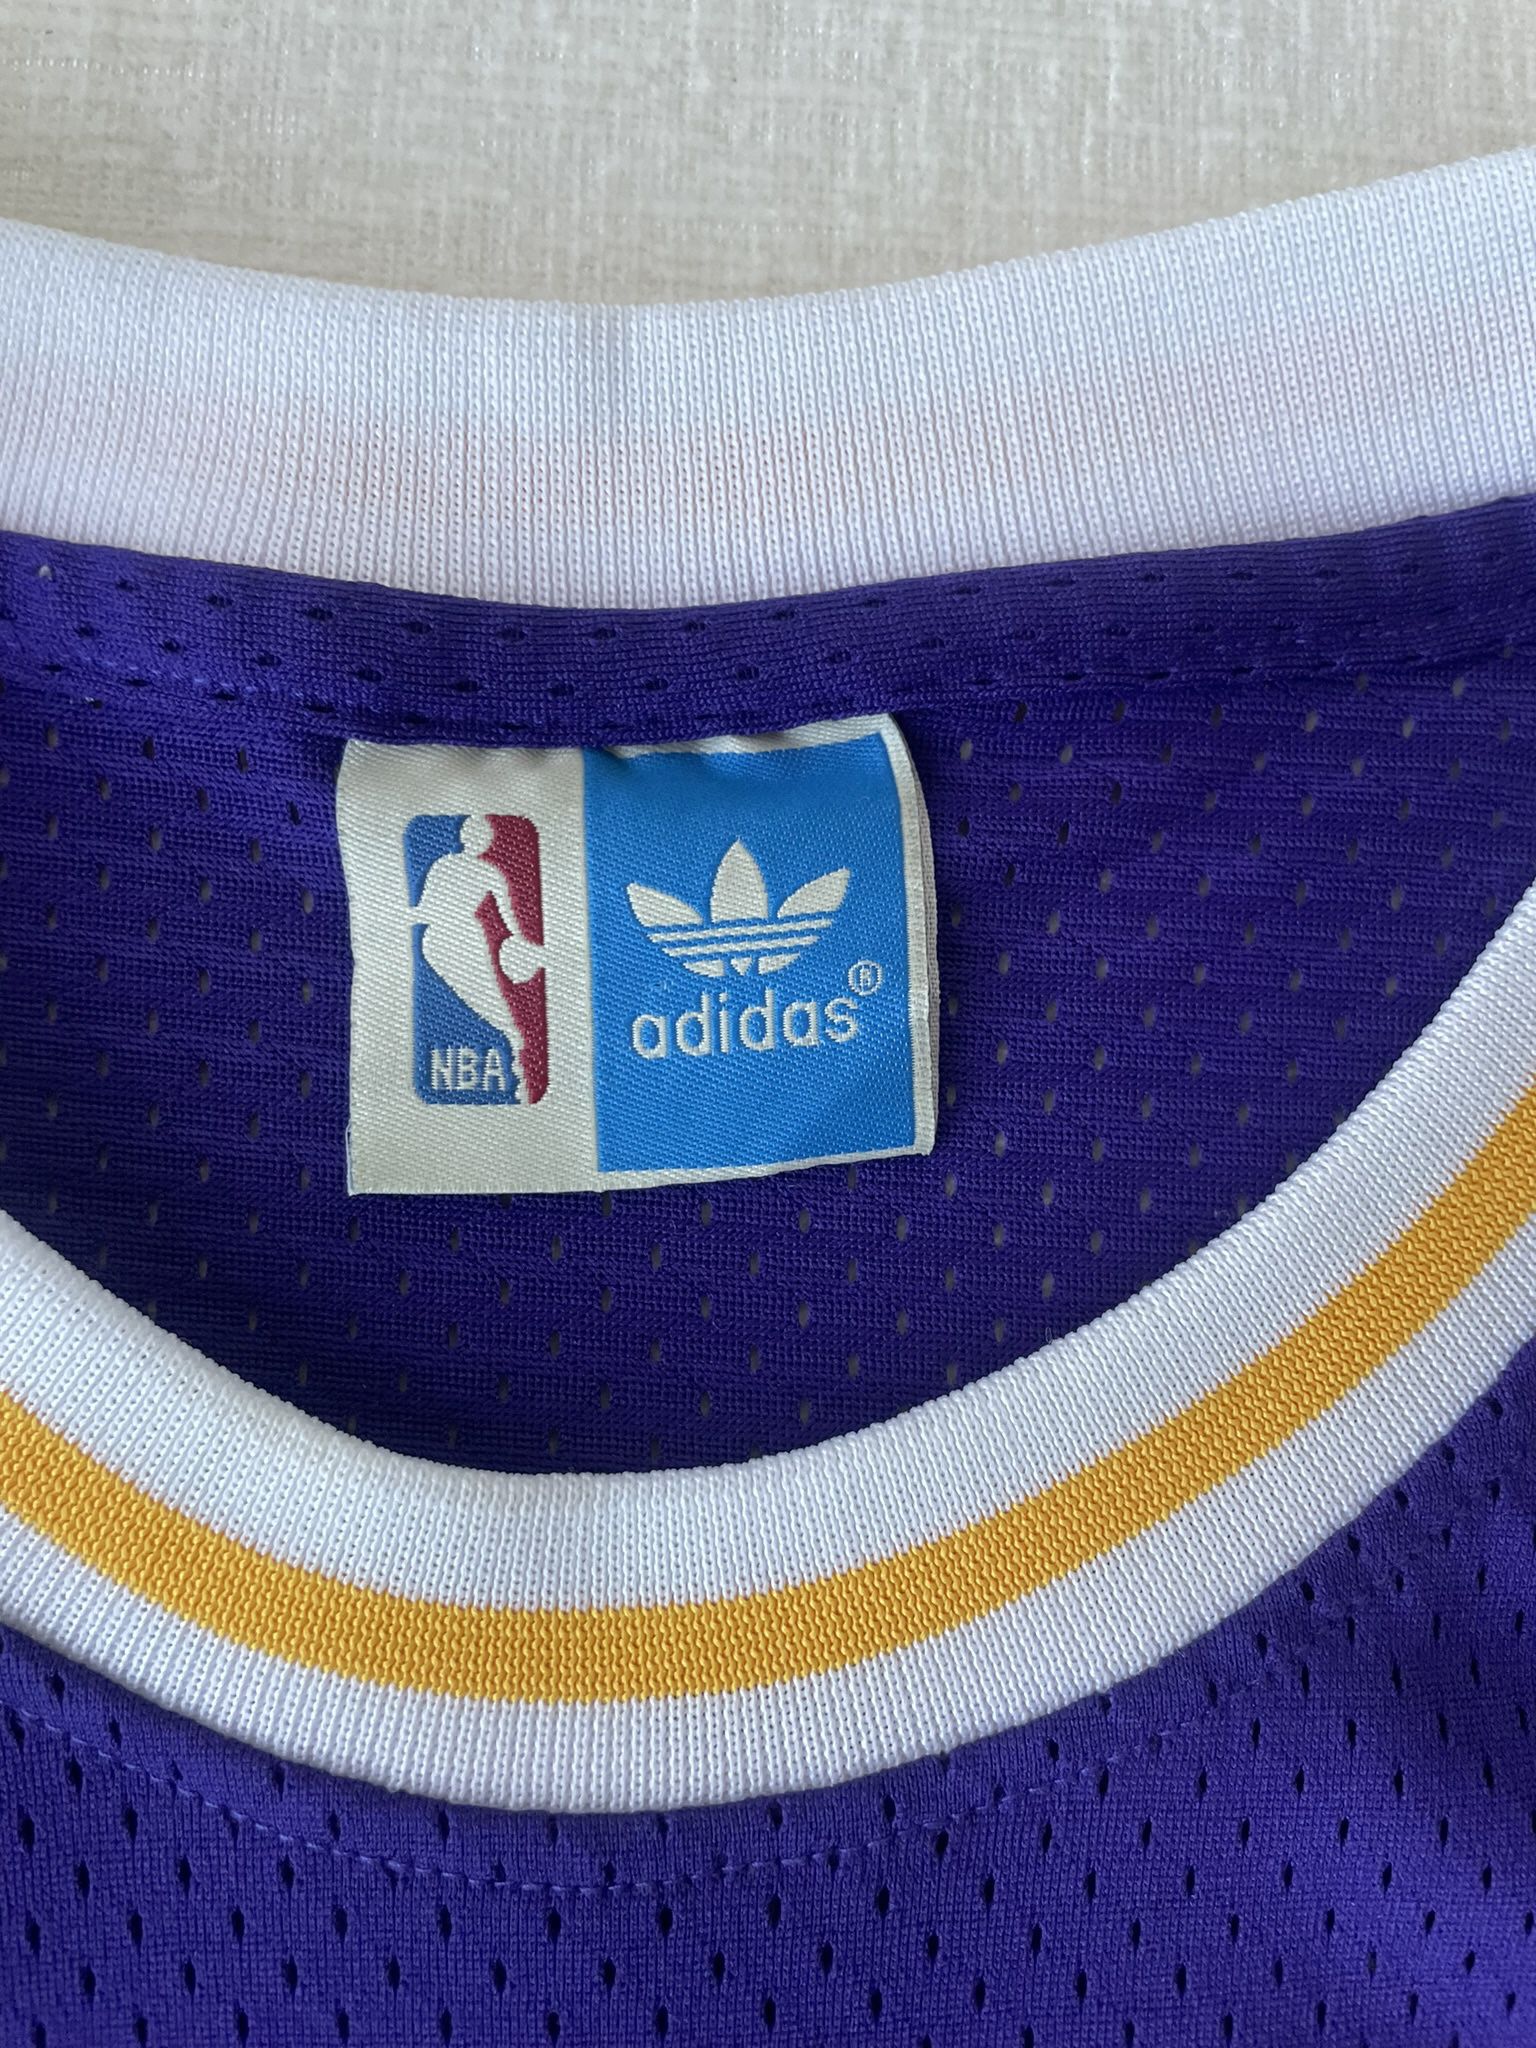 Kobe Bryant #8 Lakers jersey (Hardwood Classics)